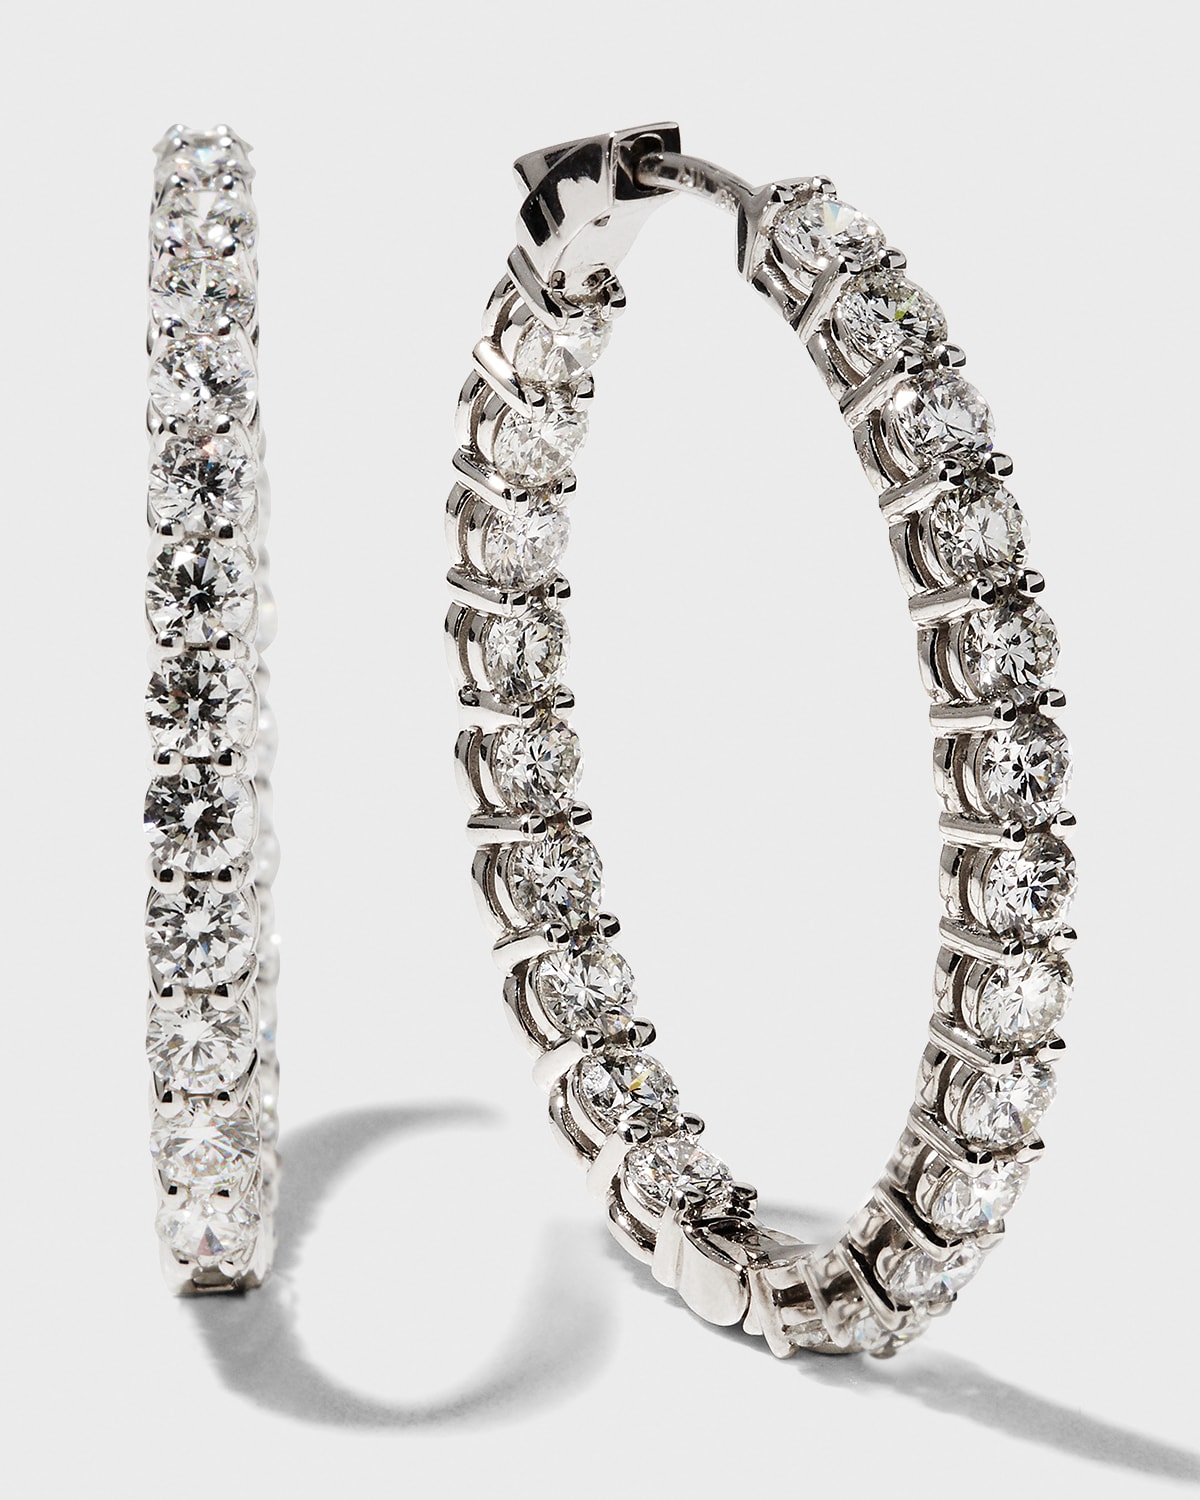 NM Diamond Collection 18k White Gold Diamond Hoop Earrings, 6.6tcw